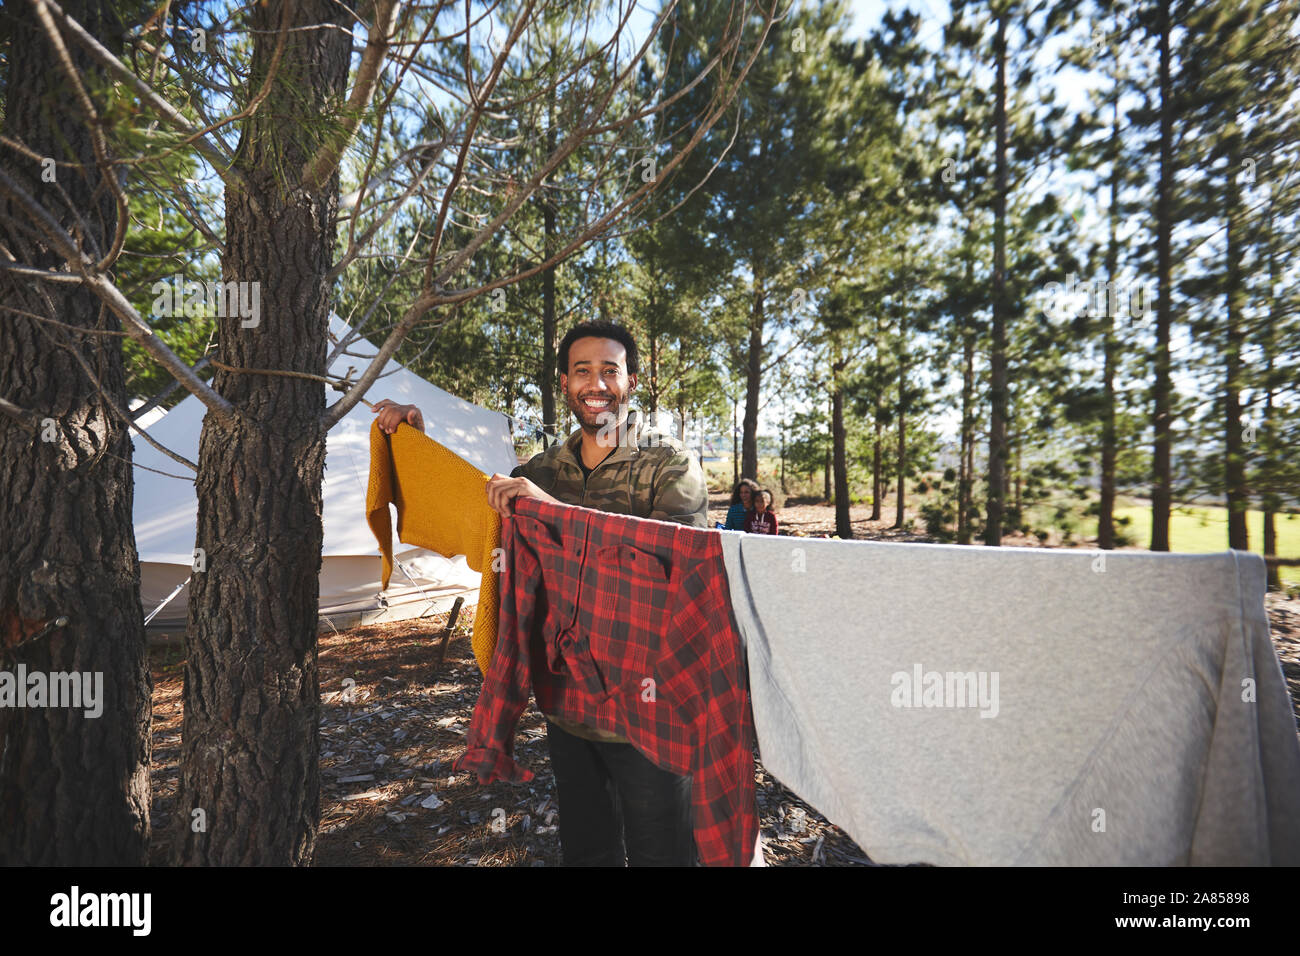 Portrait happy man hanging laundry on campsite clothesline n woods Stock Photo